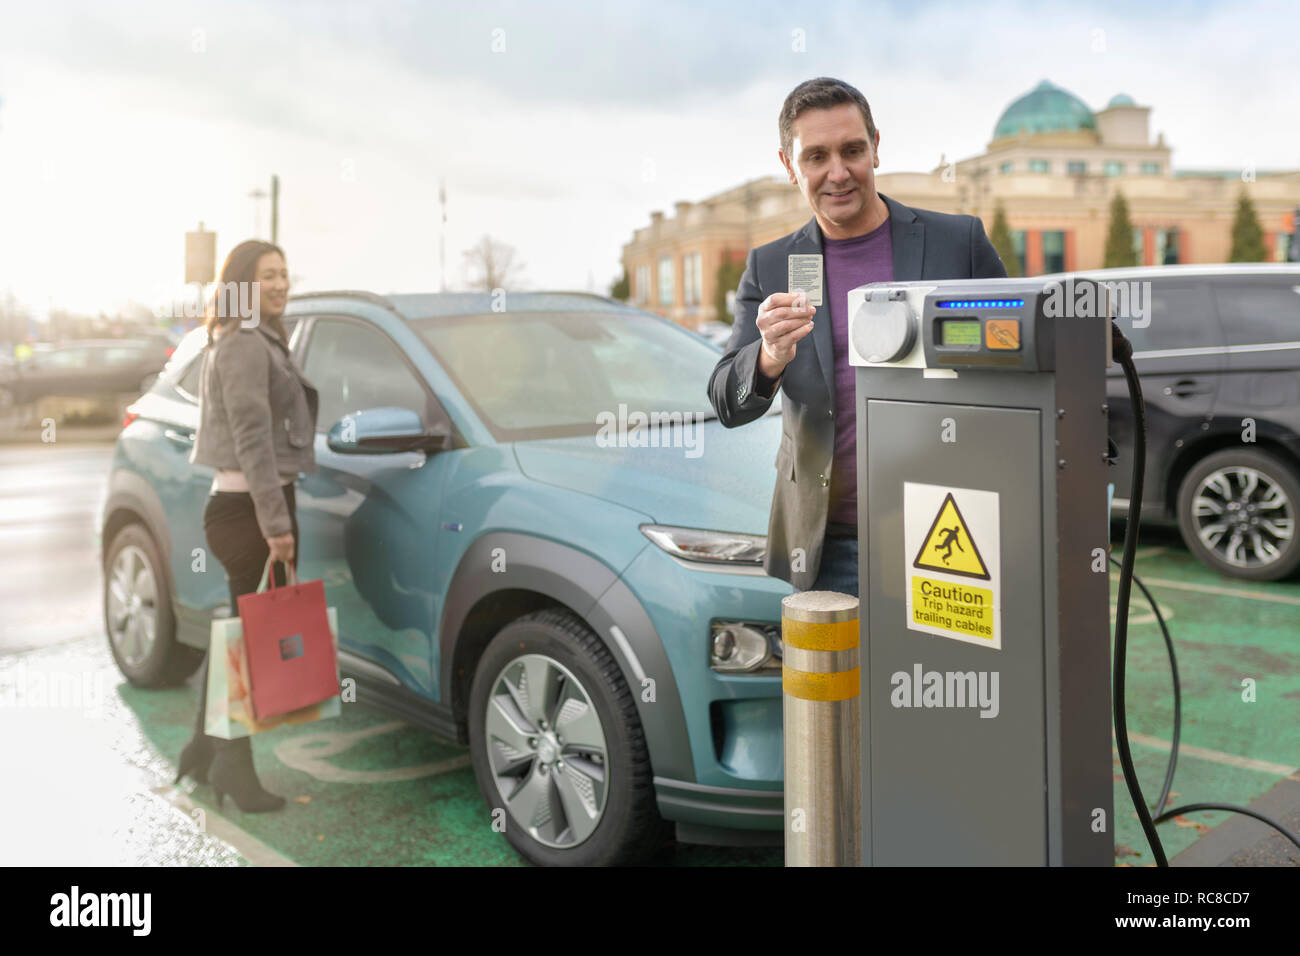 Man and woman charging electric car at car charging park, Manchester, UK Stock Photo